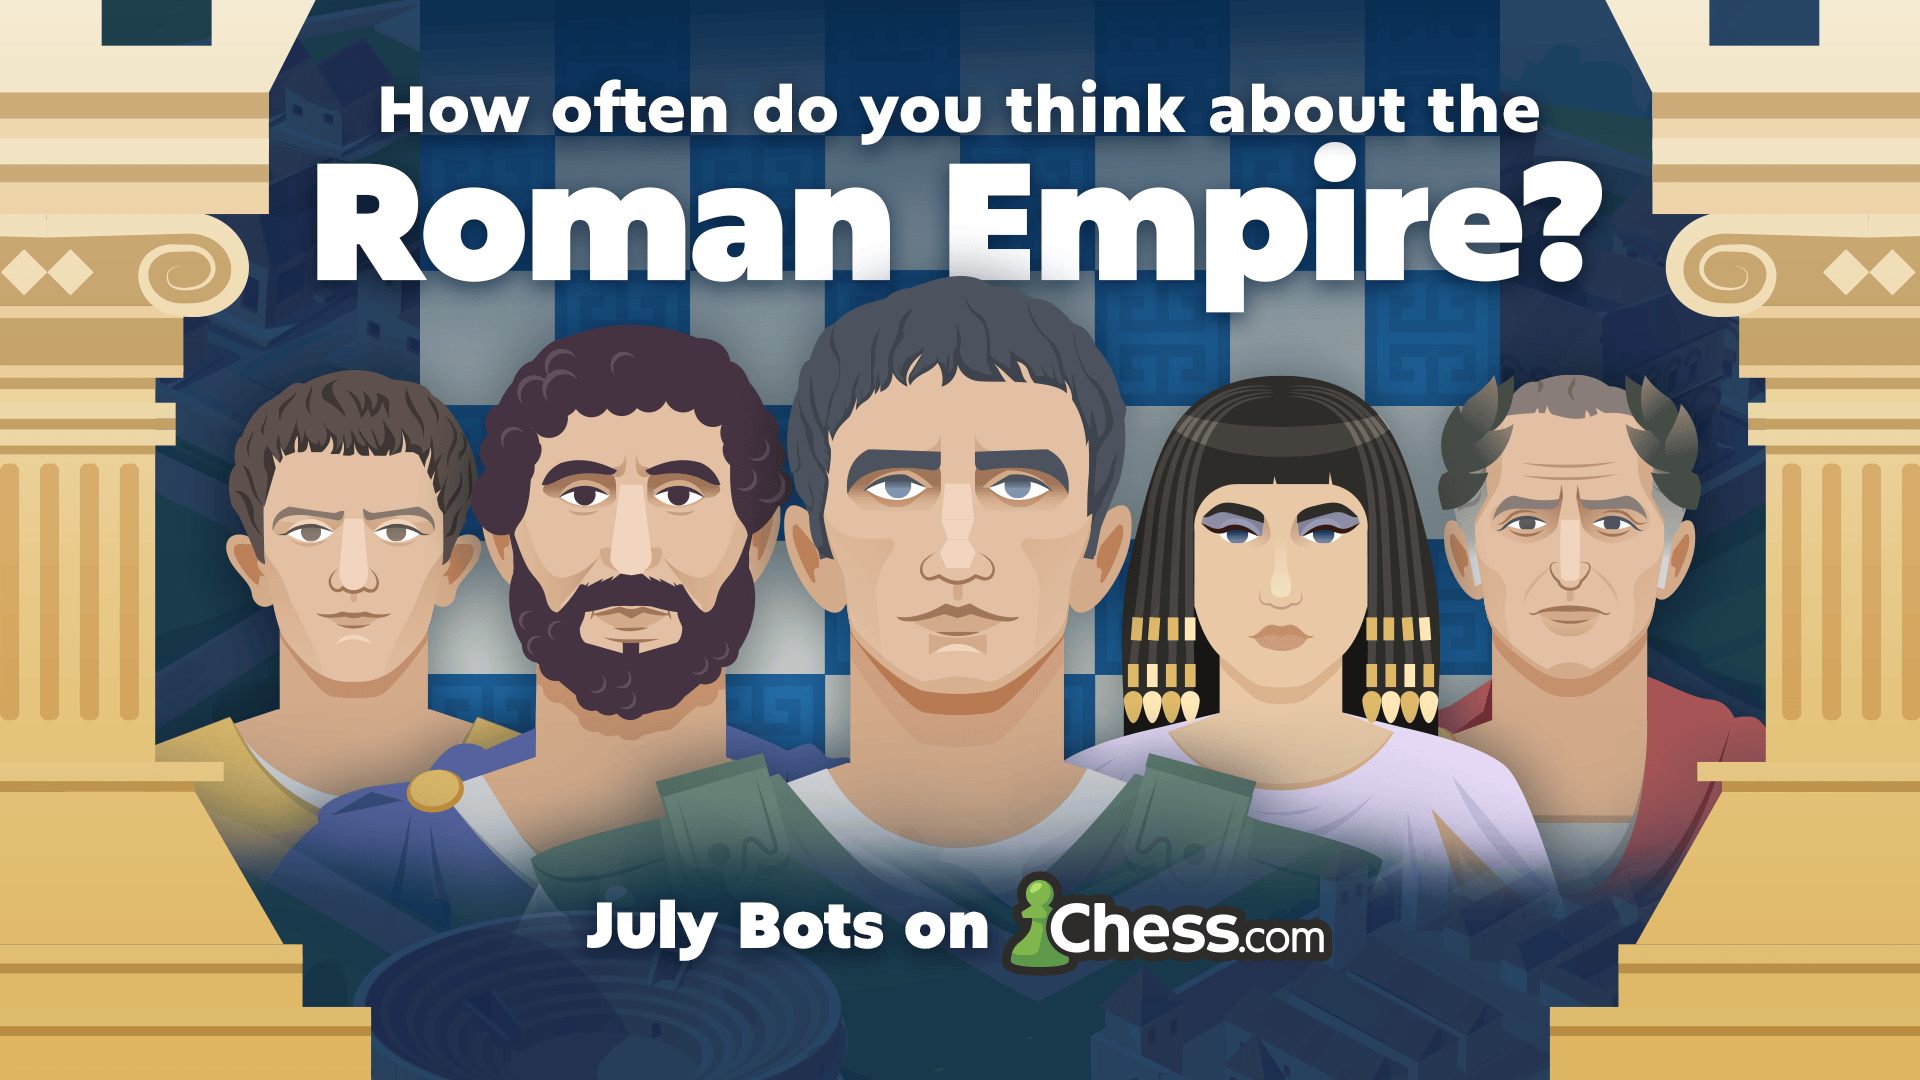 Play Against Chess.com’s Roman Empire Bots